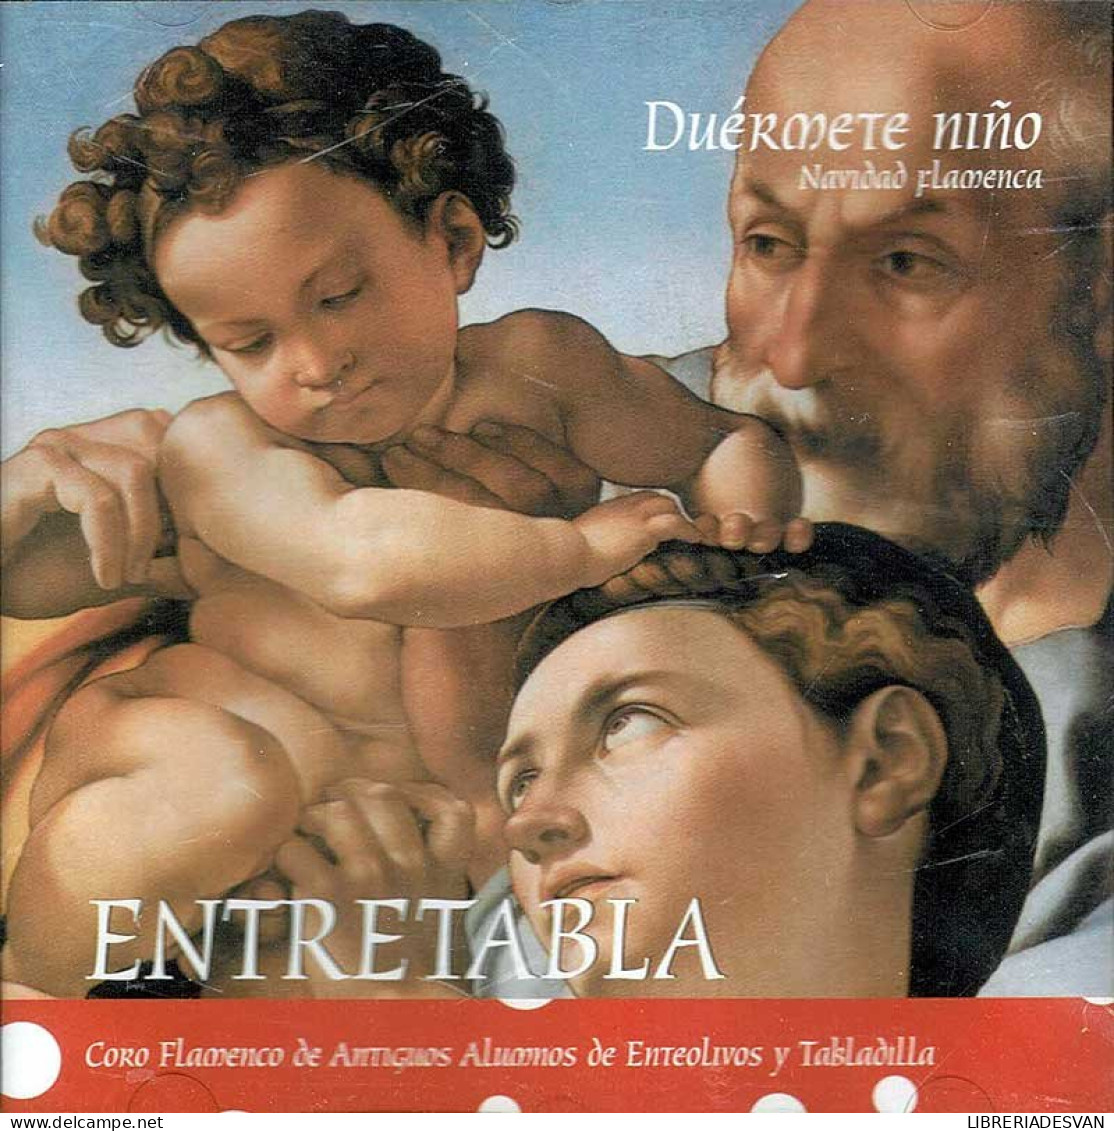 Entretabla - Duérmete Niño. Navidad Flamenca. CD - Other - Spanish Music